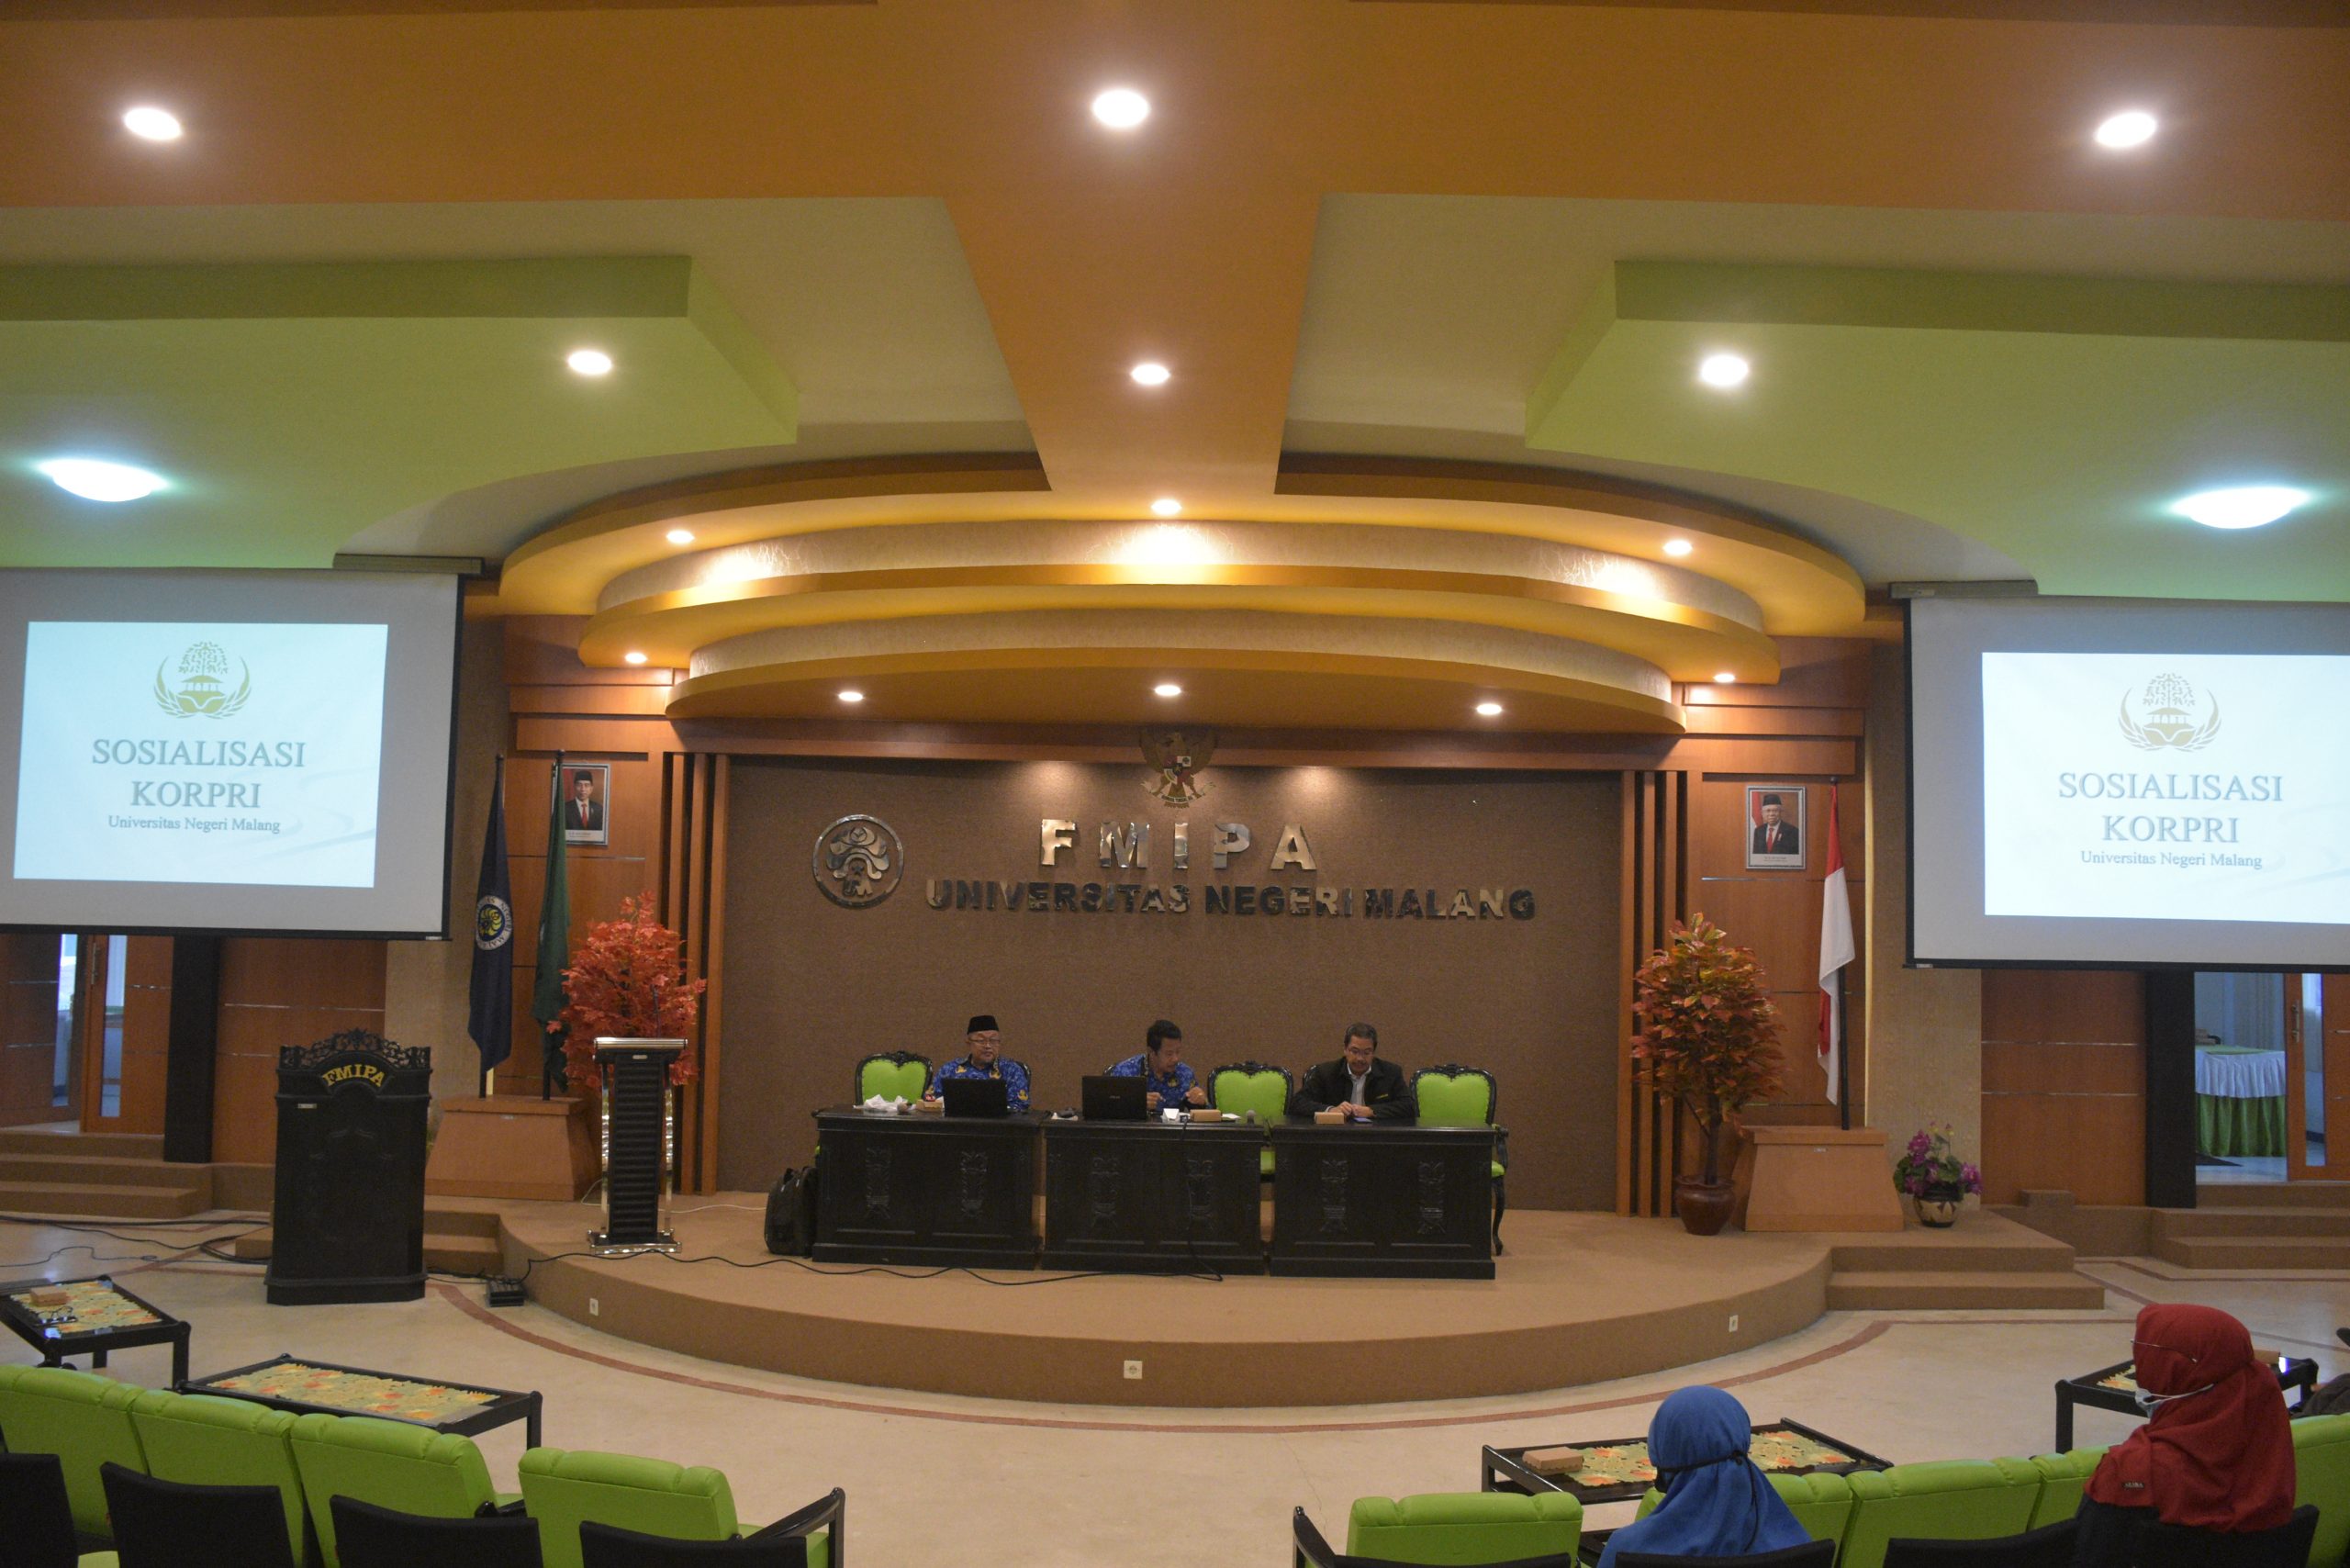 Sosialosasi Program KORPRI oleh Dewan Pengurus KORPRI Universitas Negeri Malang